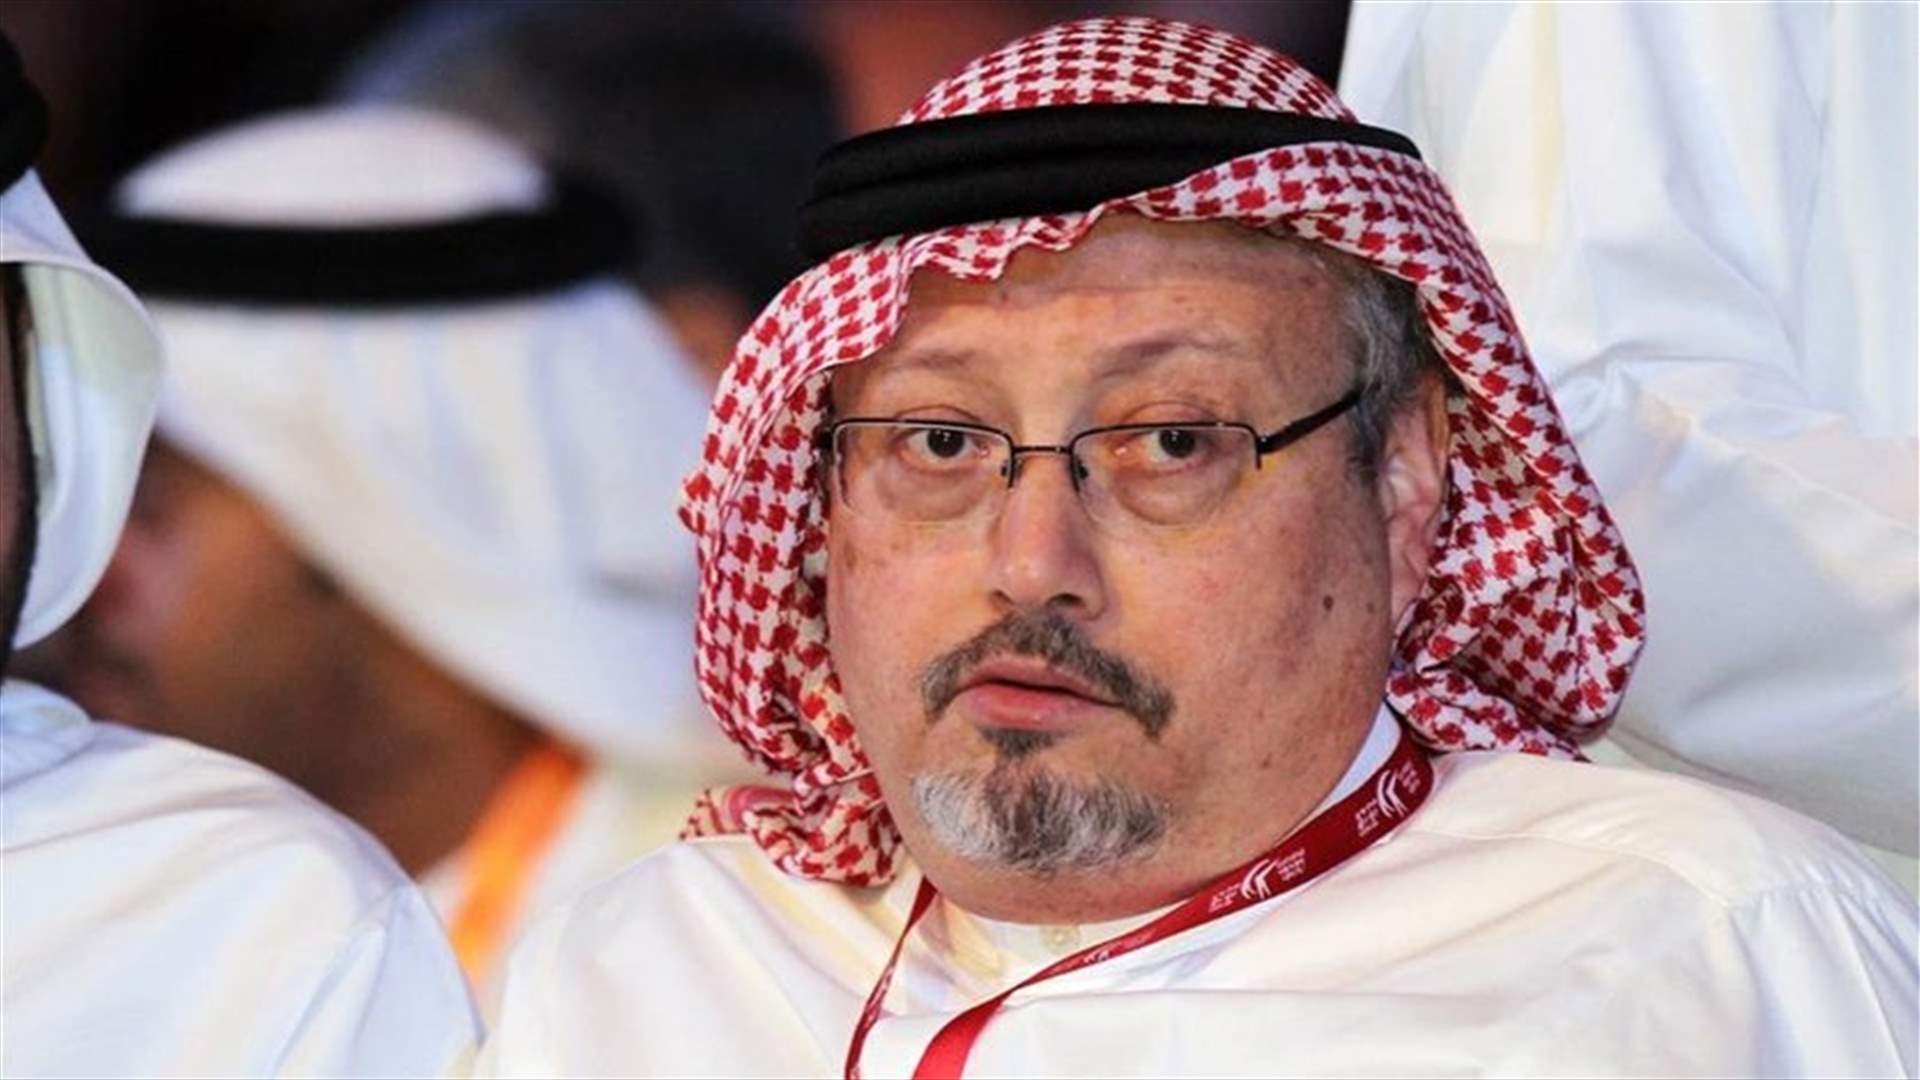 UK says any response over Khashoggi case would be &quot;considered&quot;